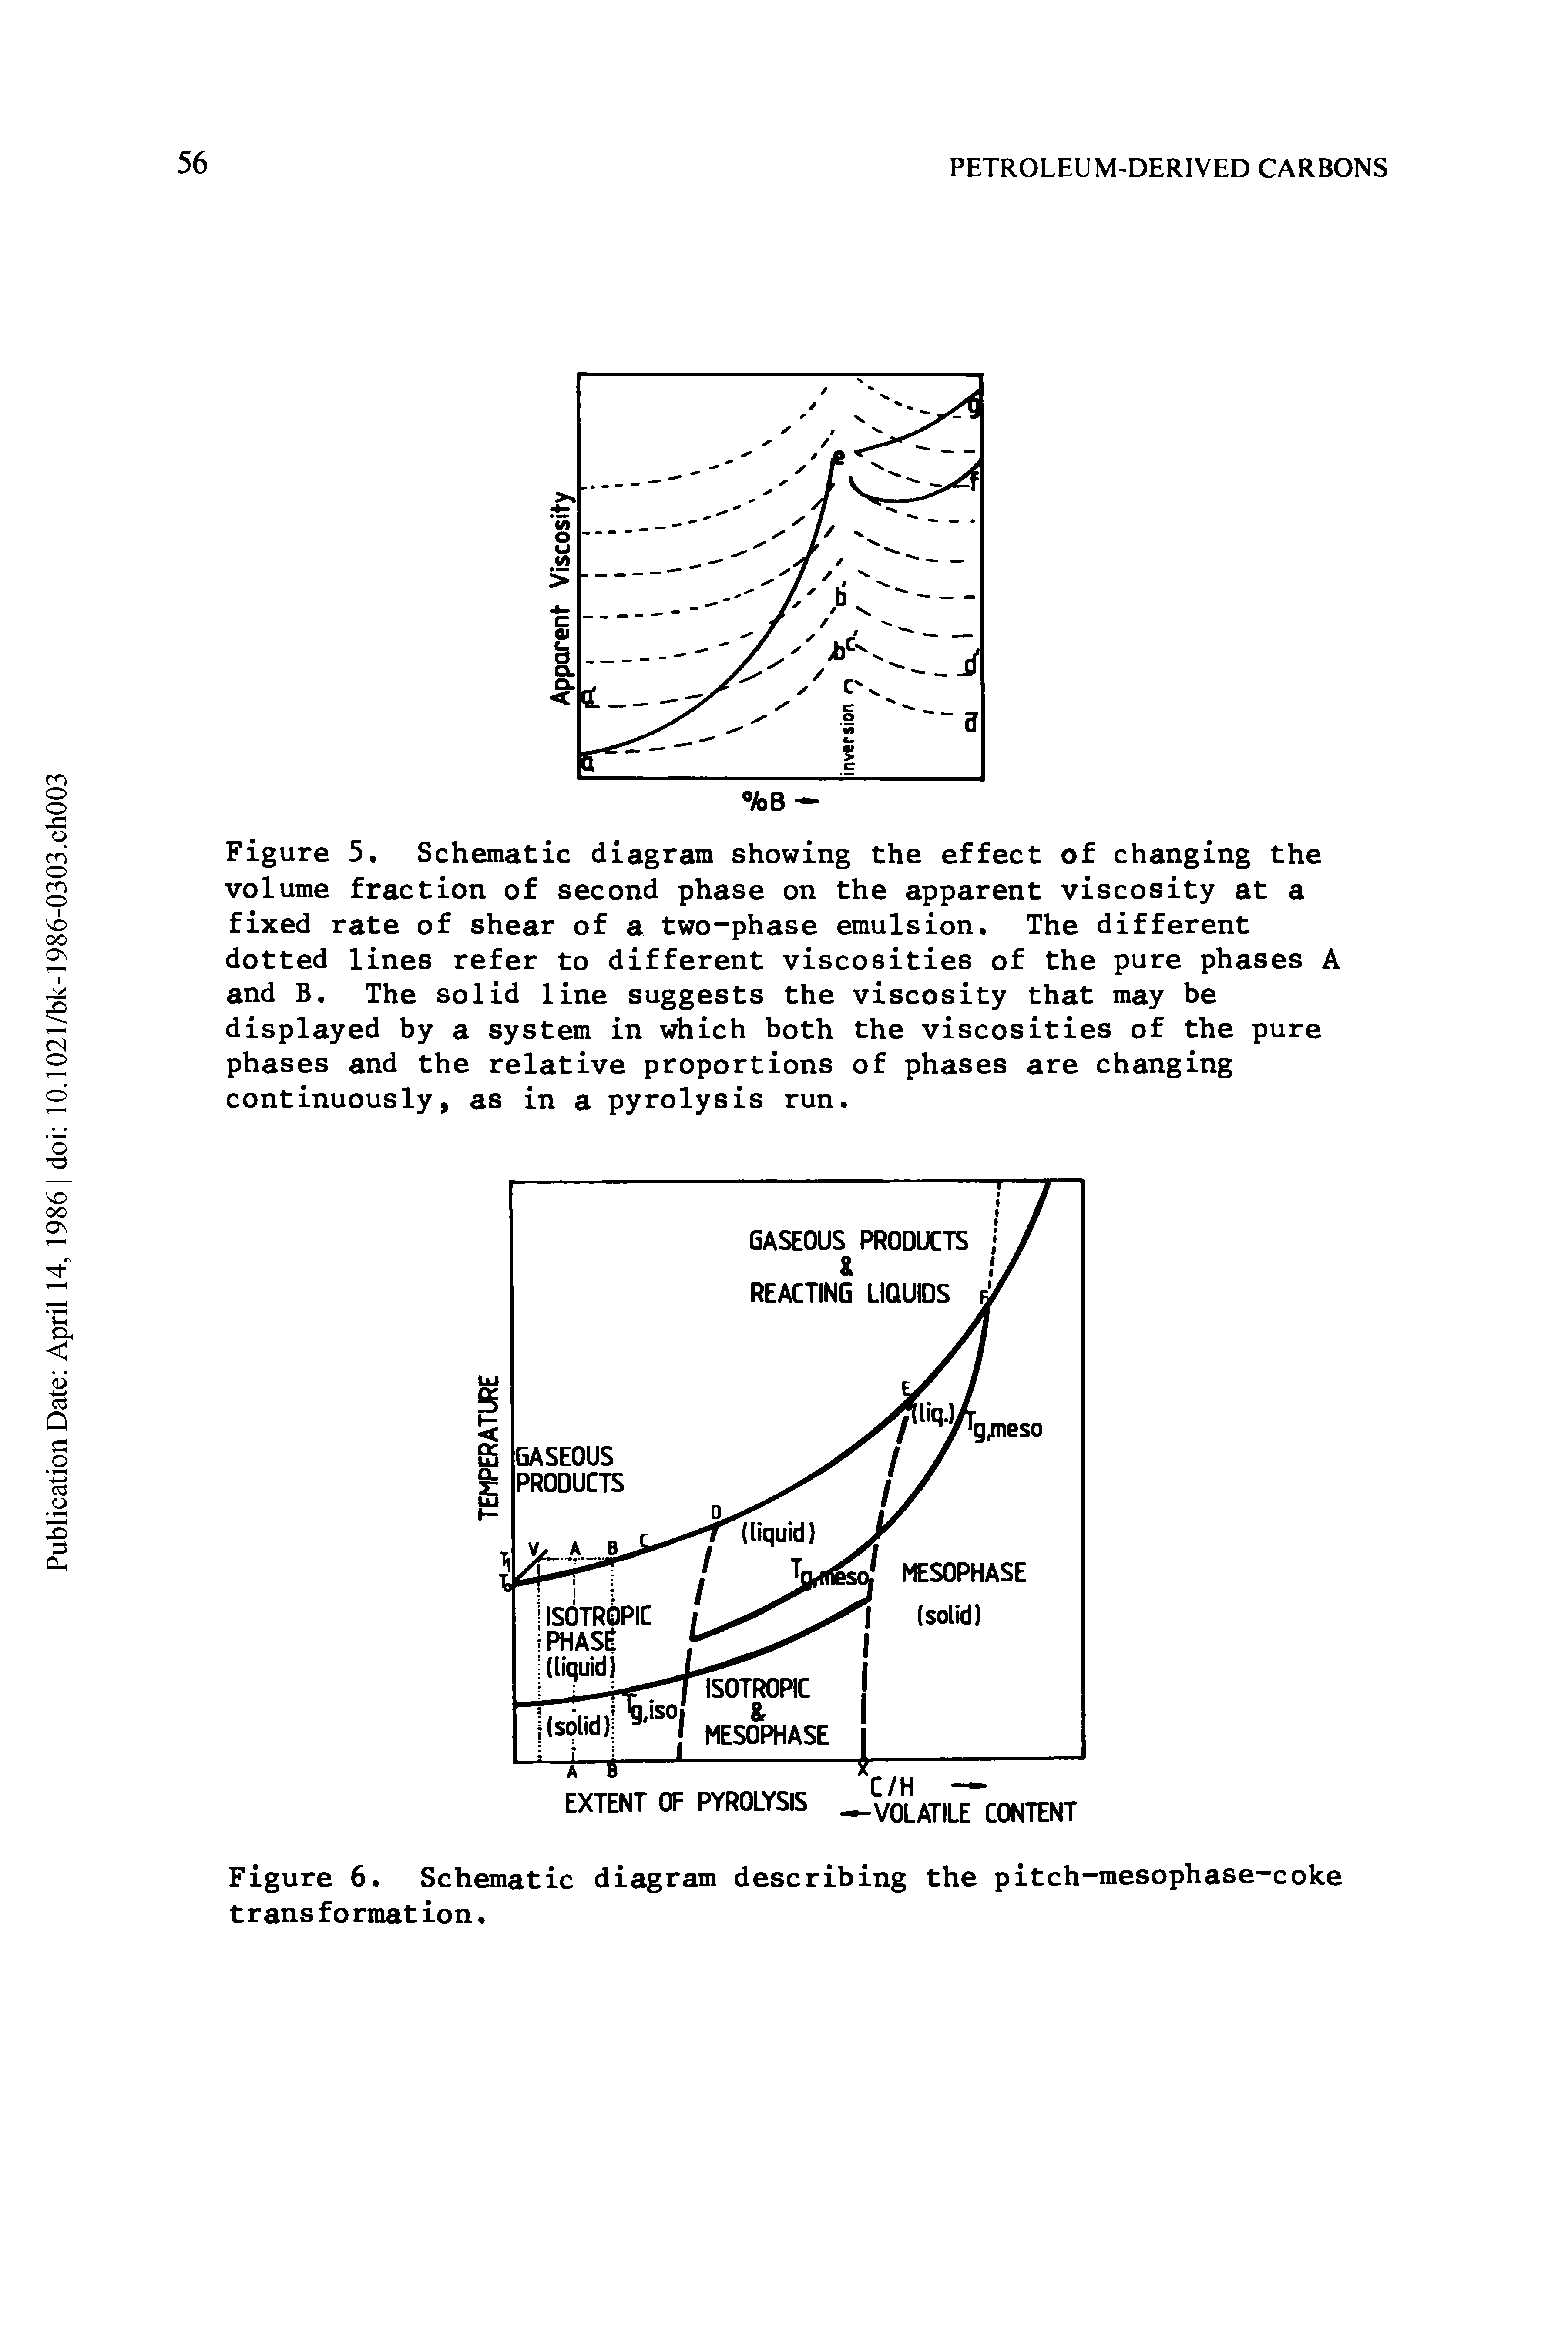 Figure 6, Schematic diagram describing the pitch-mesophase-coke transformation.